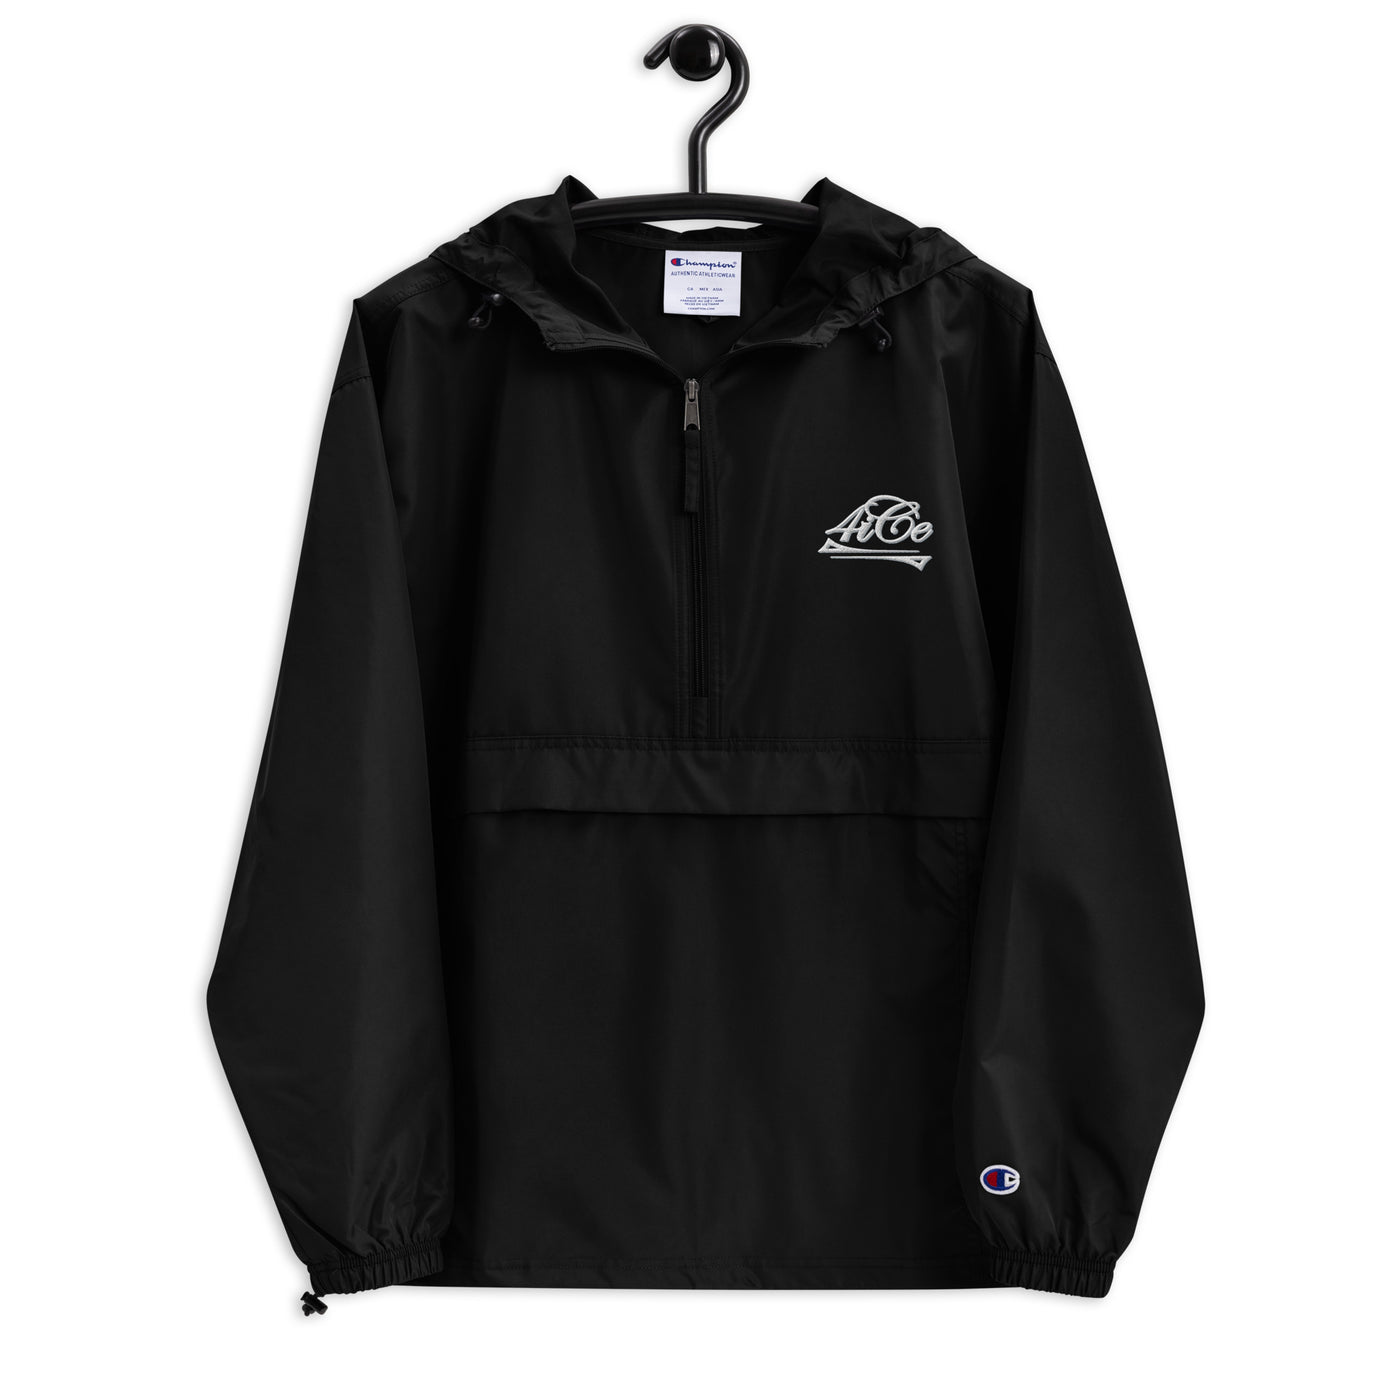 4iCe® Elite Boxing black embroidered jacket